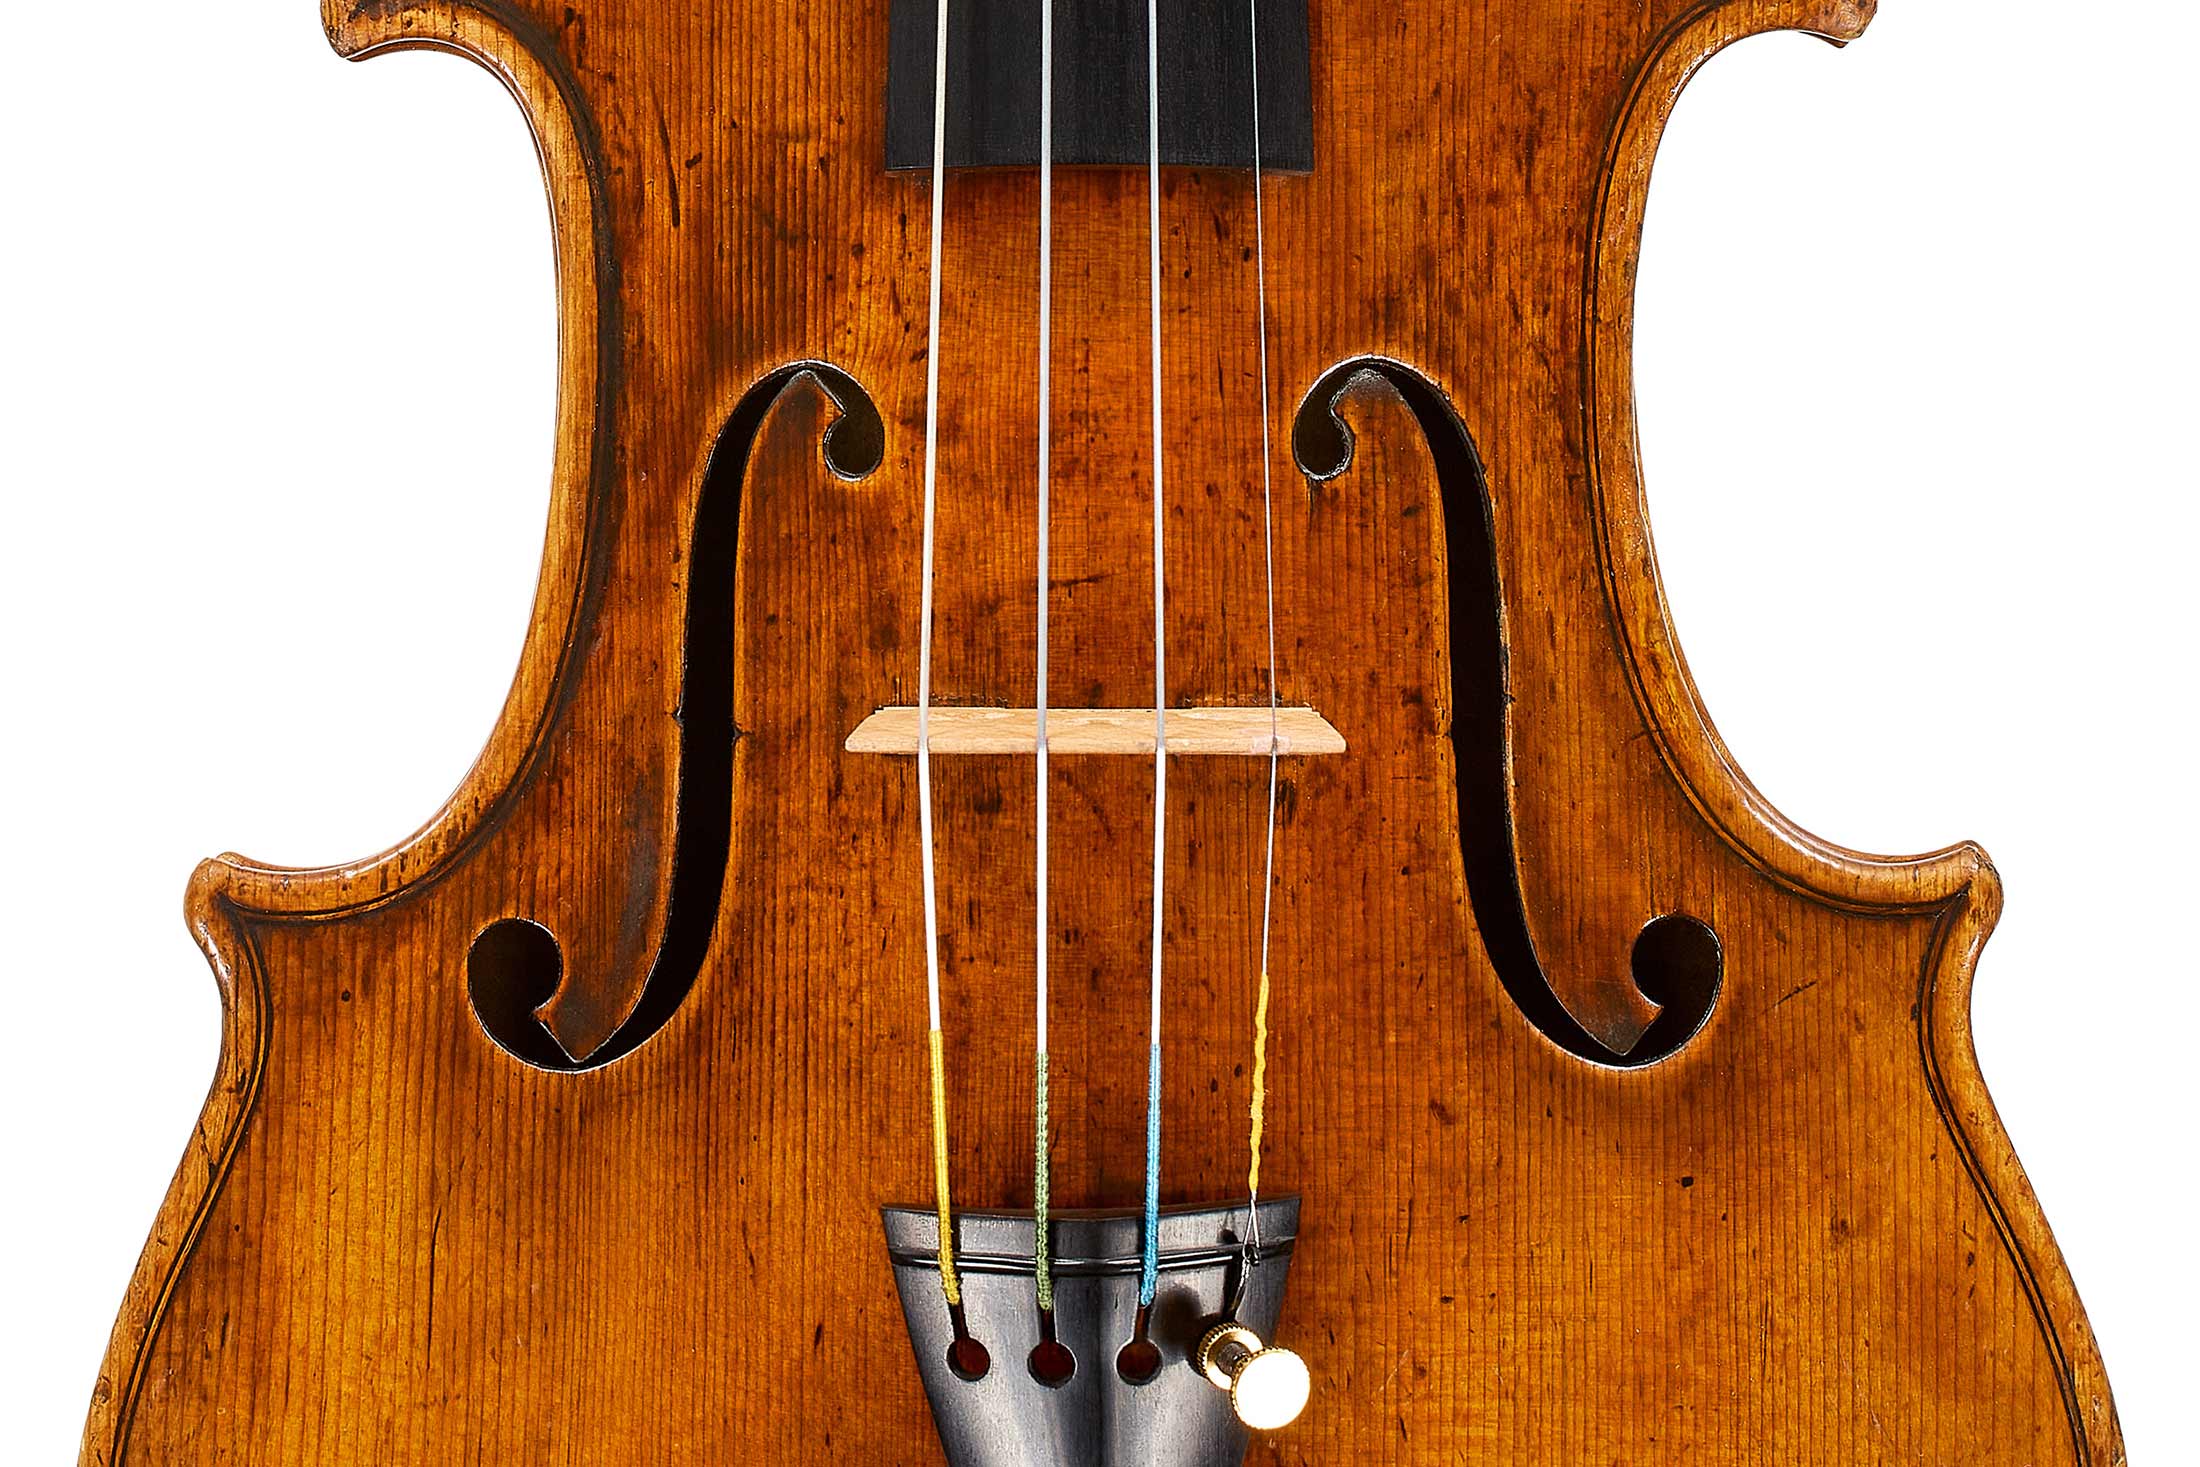 A Rare Stradivarius Estimated at $20 Million Heads to Auction